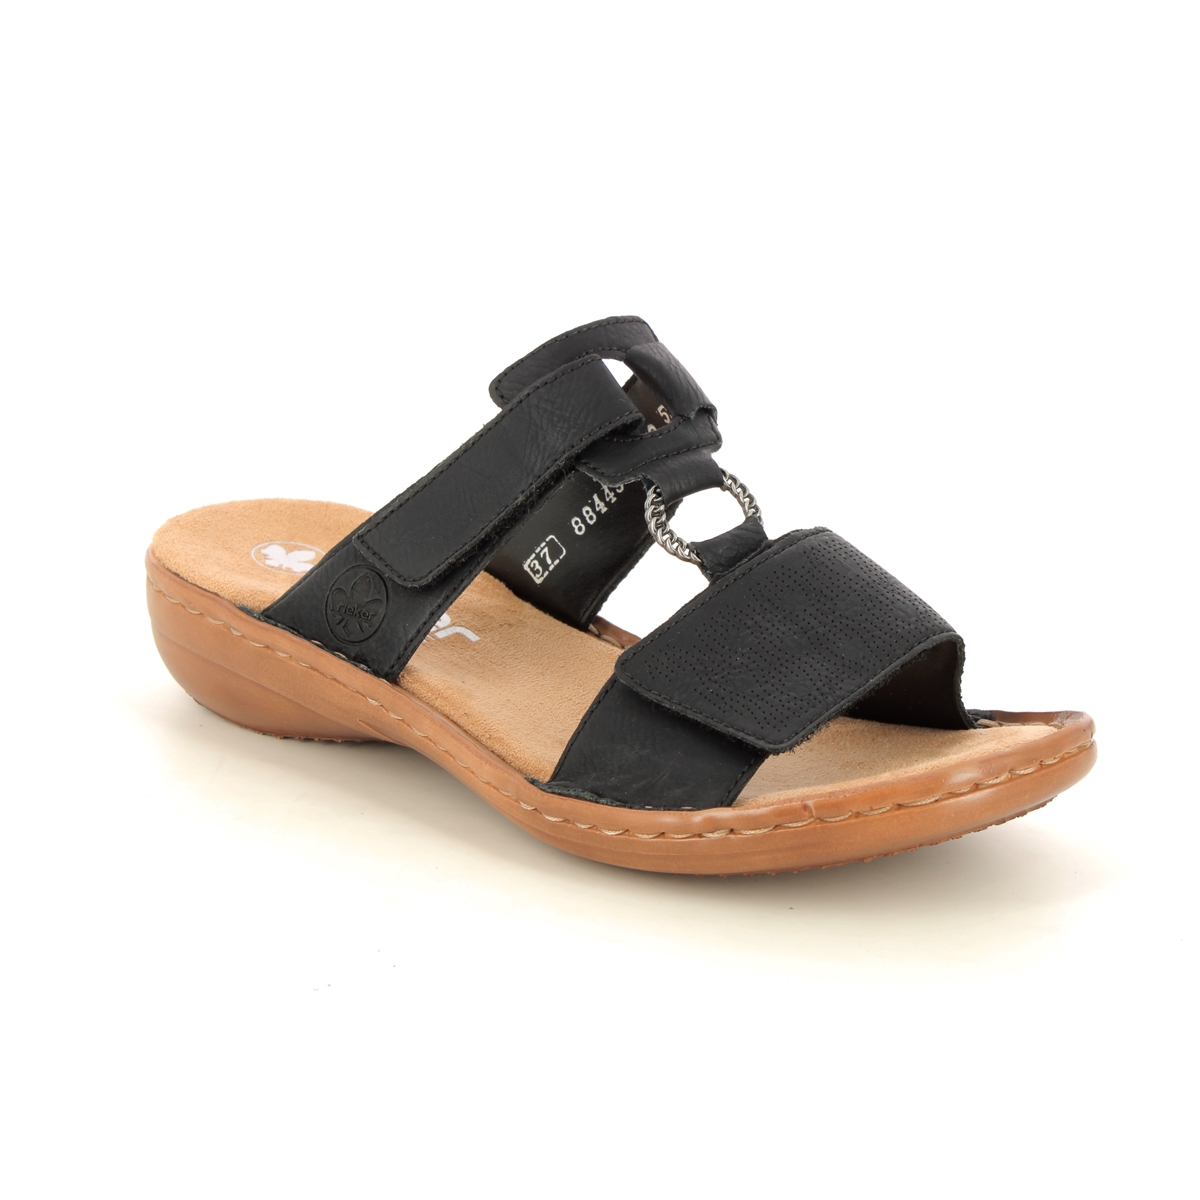 Rieker 60885-00 Black Womens Slide Sandals in a Plain Man-made in Size 38